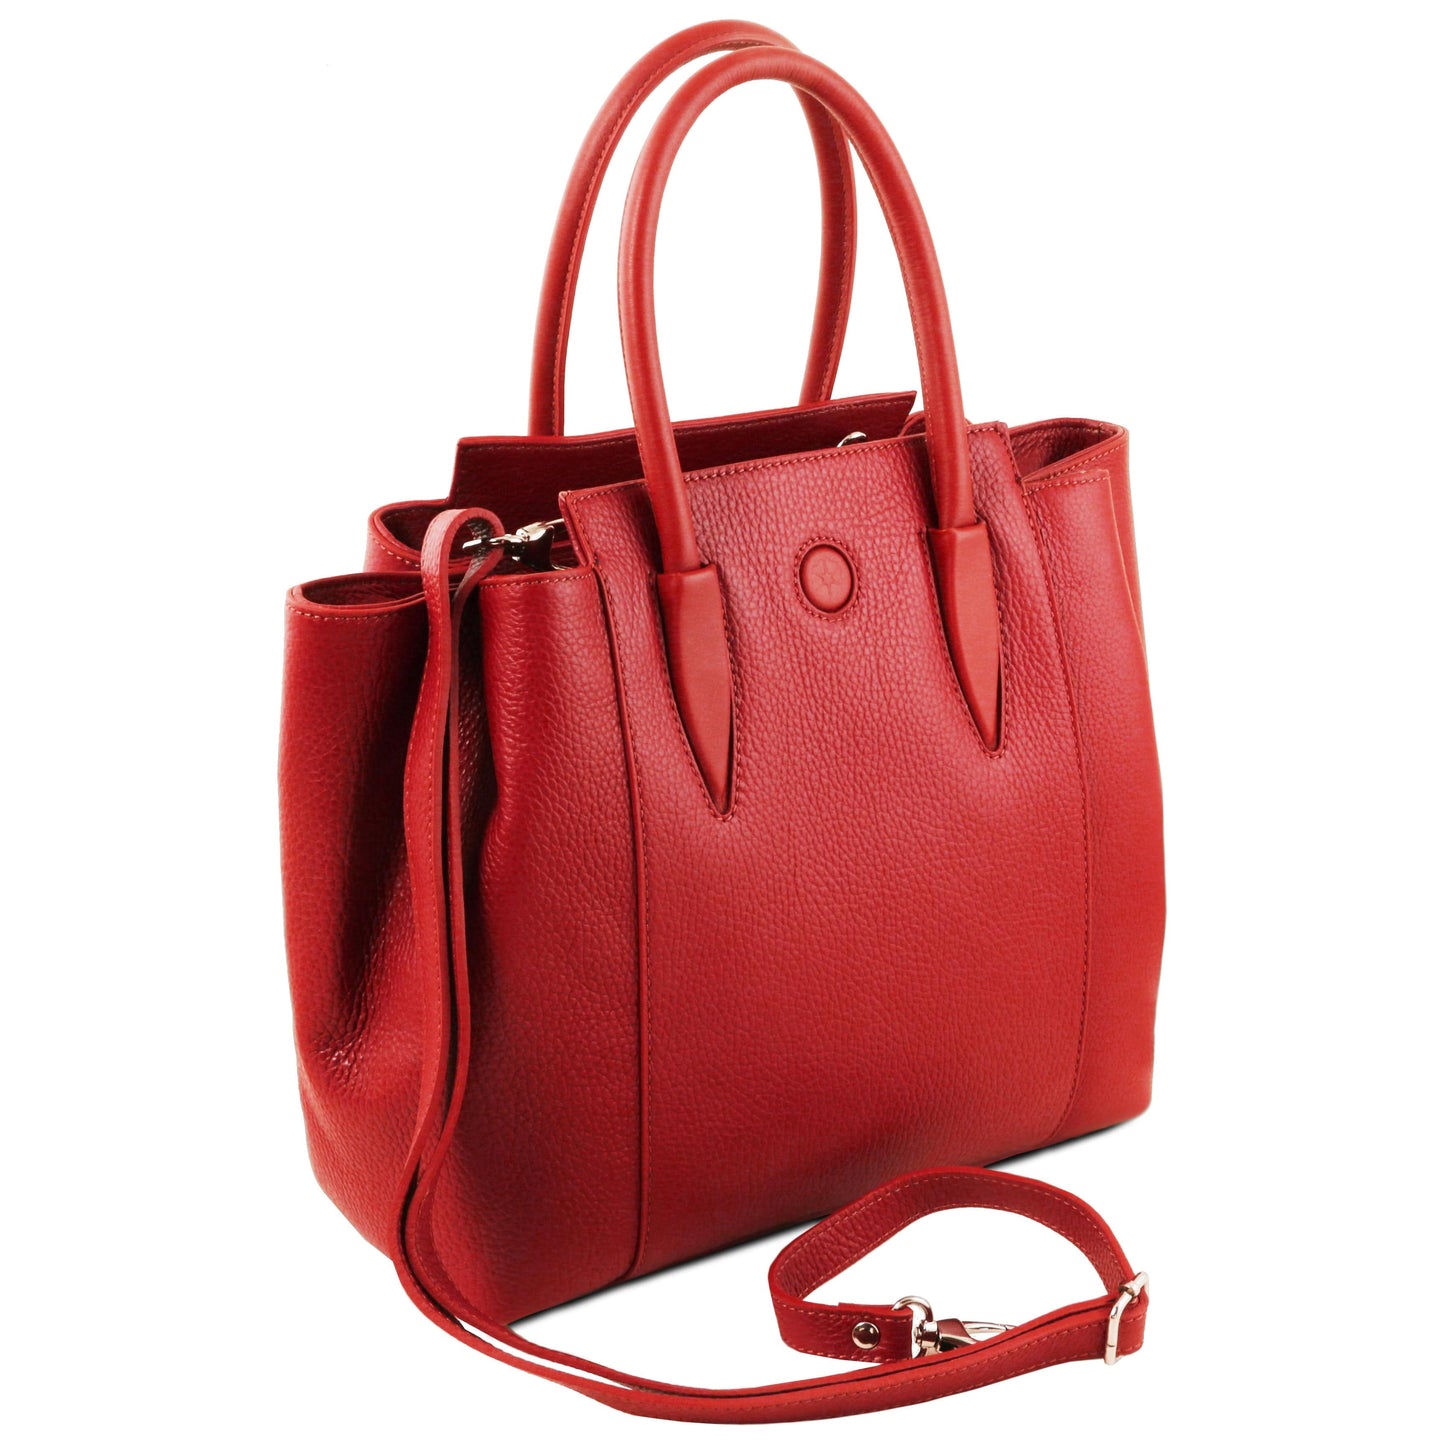 Tulipan - Leather handbag | TL141727 - Premium Leather handbags - Just €129.63! Shop now at San Rocco Italia